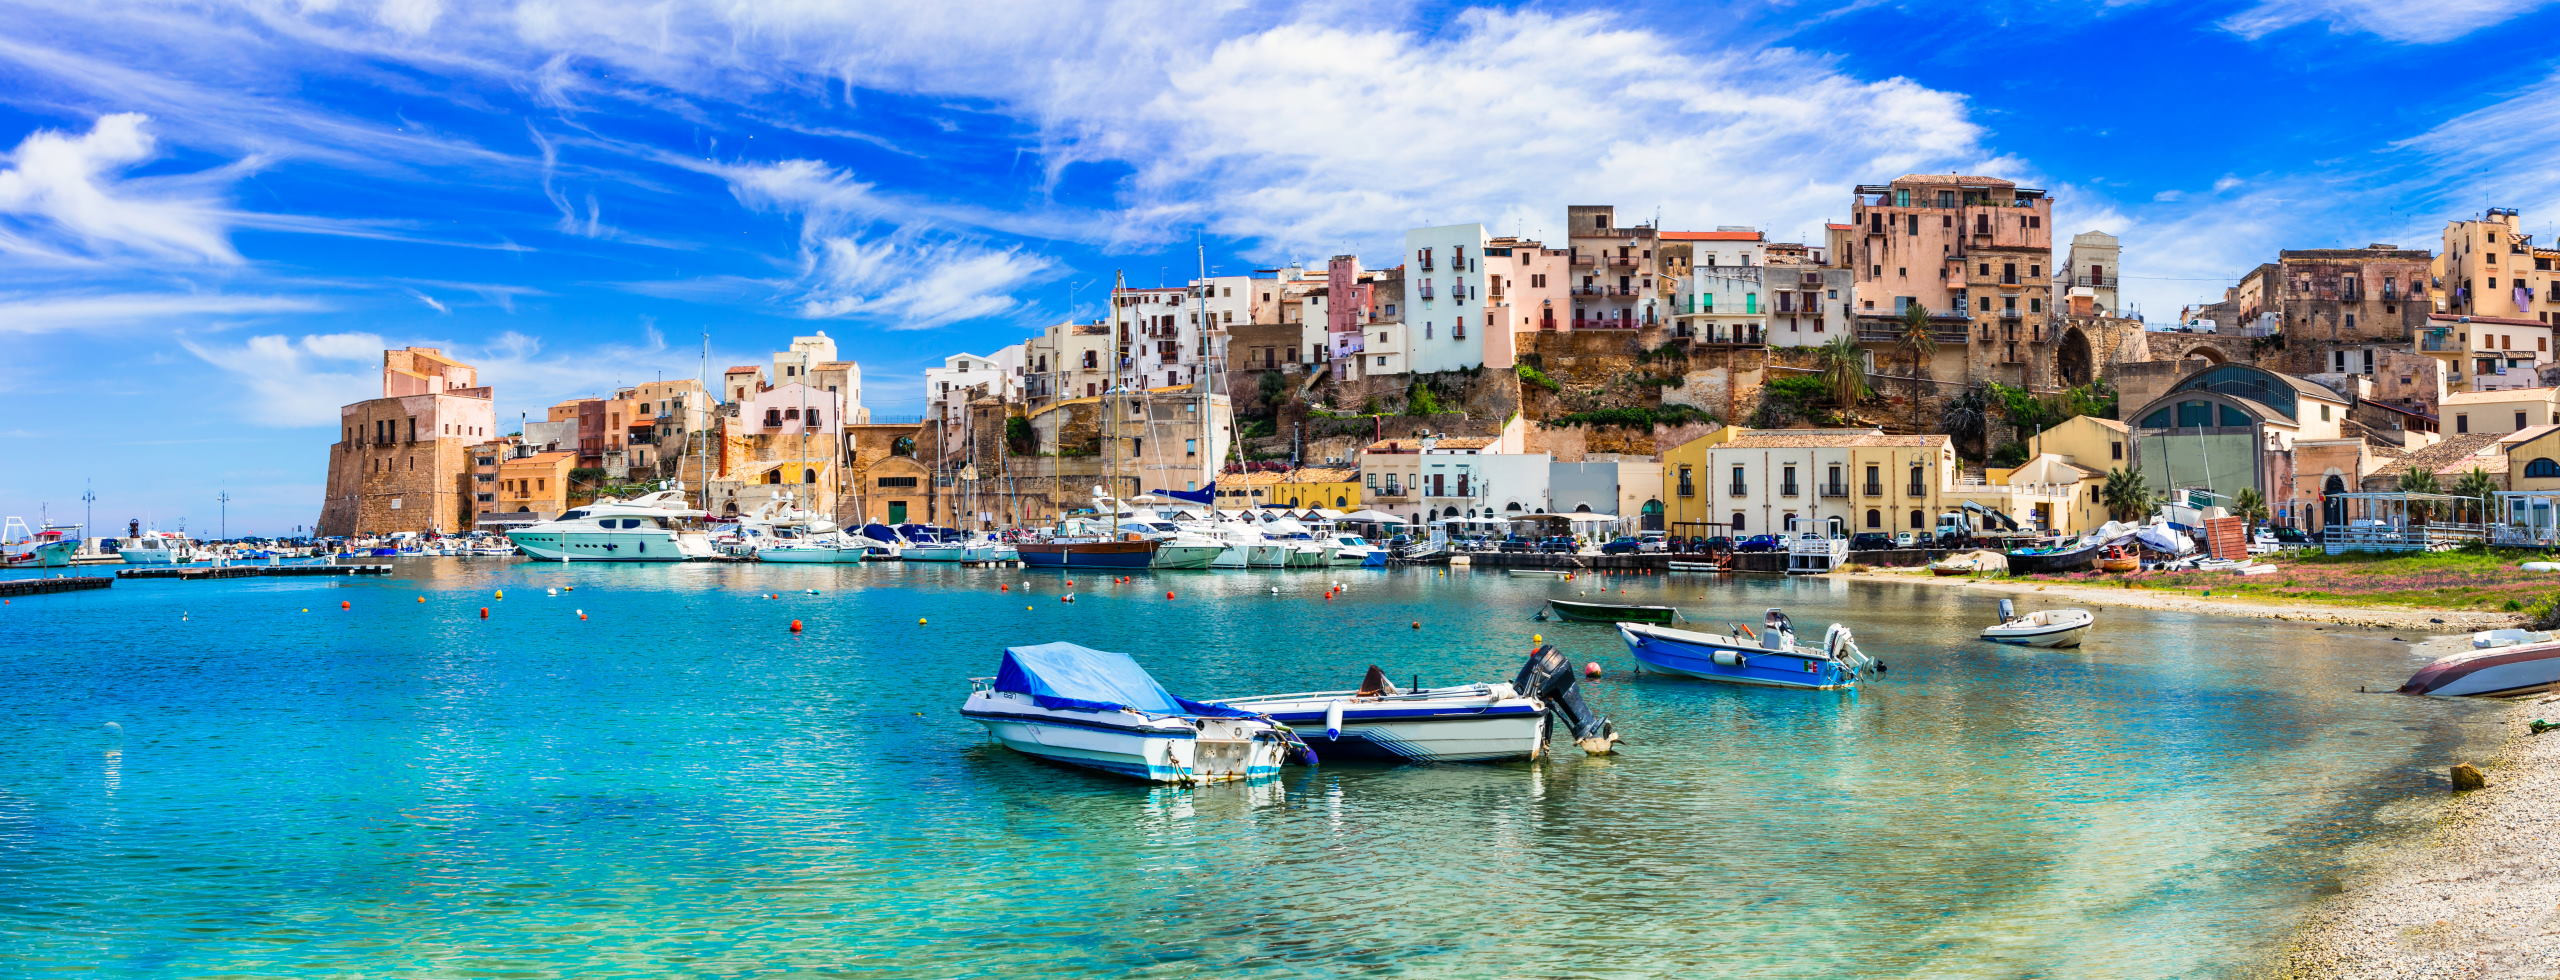 Sicily's stunning UNESCO World Heritage Sites - Tours of Sicily